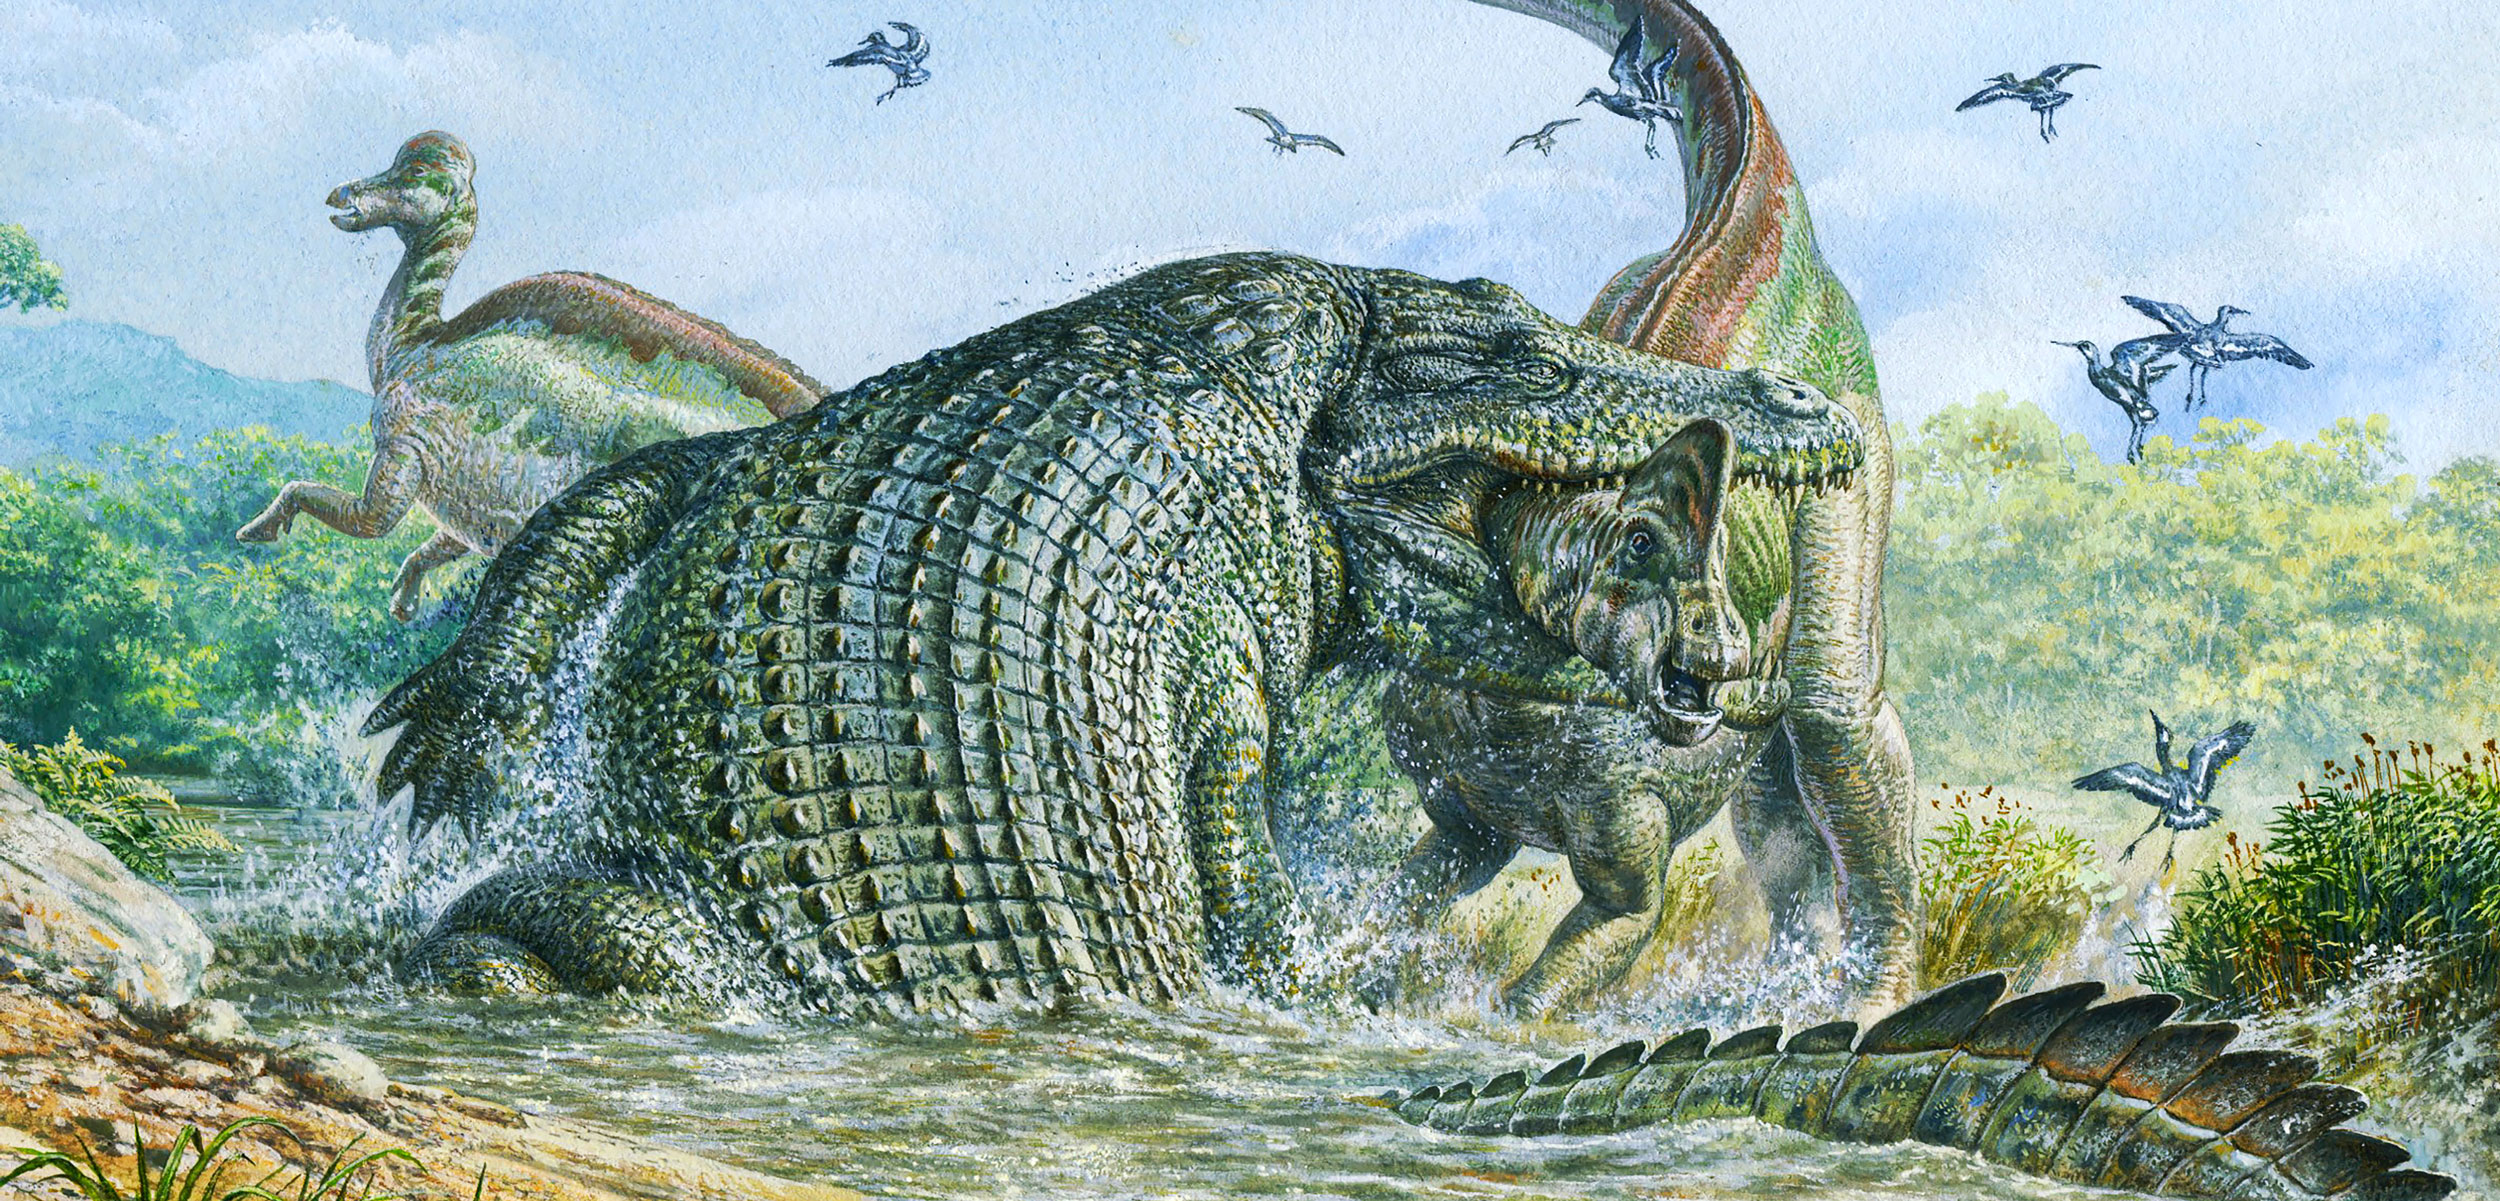 Deinosuchus reptile attacking a dinosaur